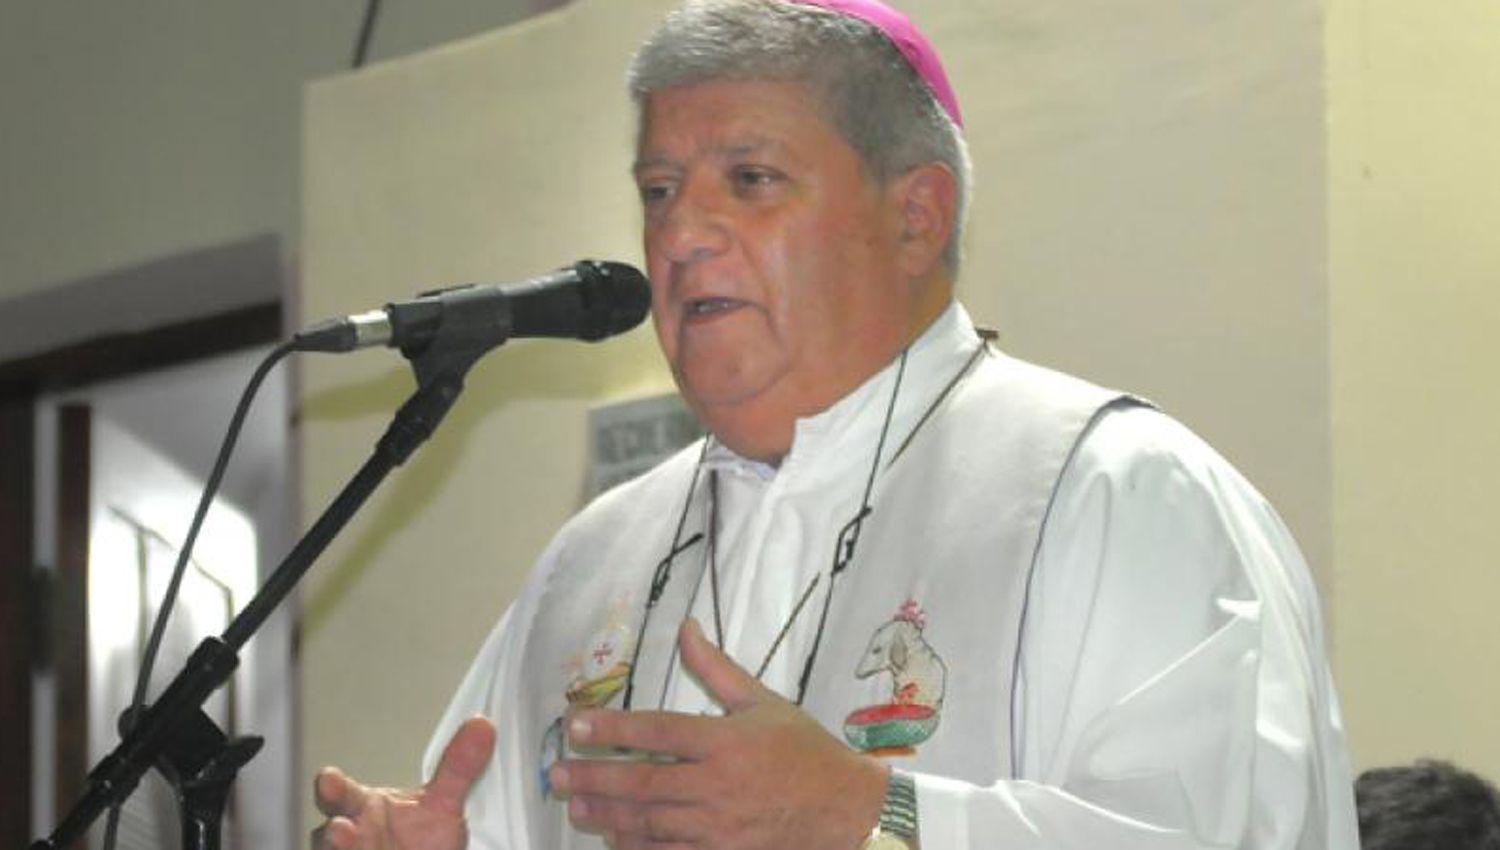 Robaron pertenencias personales al obispo auxiliar Martiacutenez Ossola